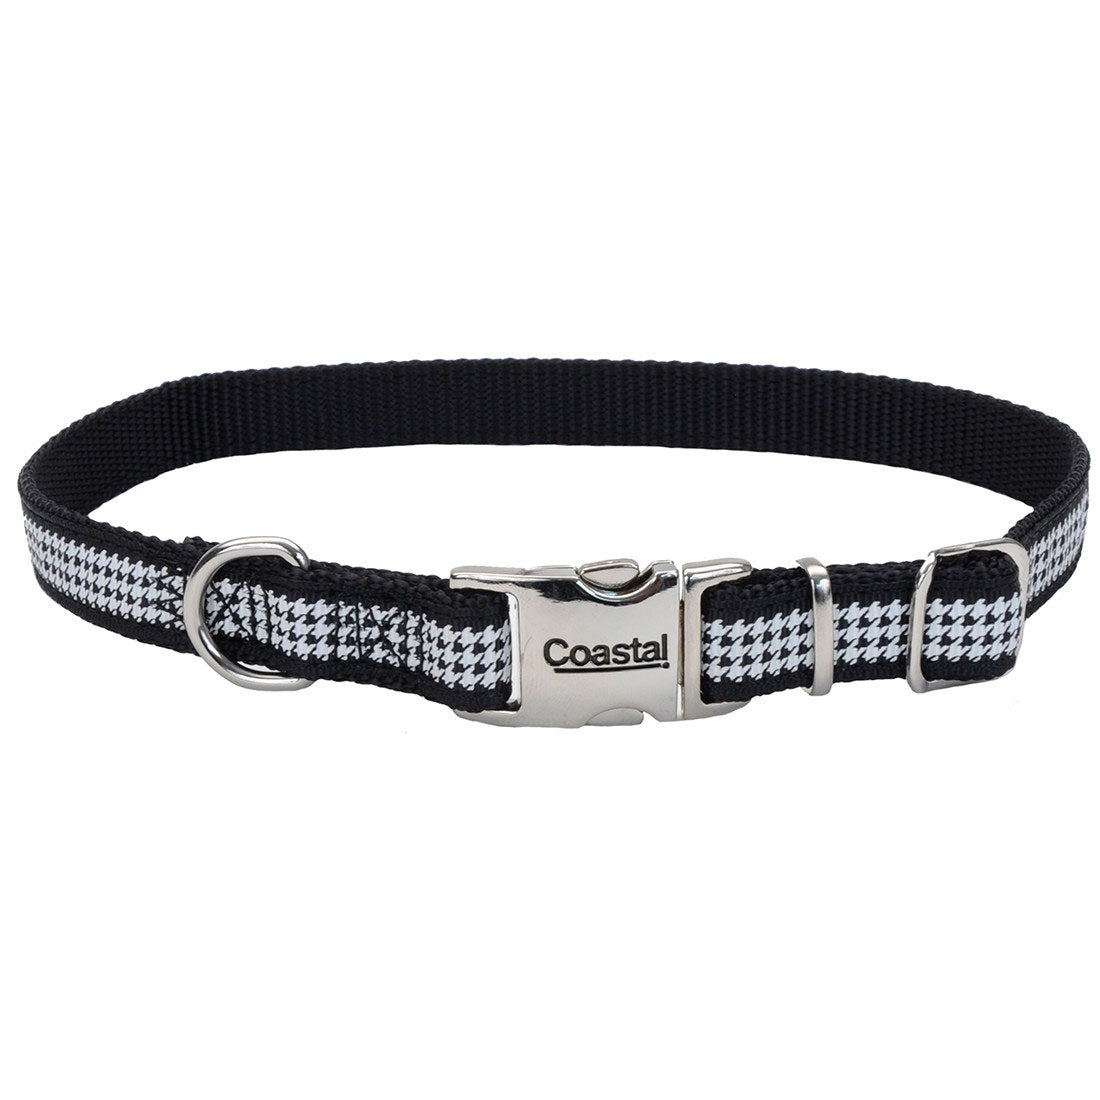 Coastal Ribbon Adjustable Dog Collar with Metal Clip Blue Plaid S/M